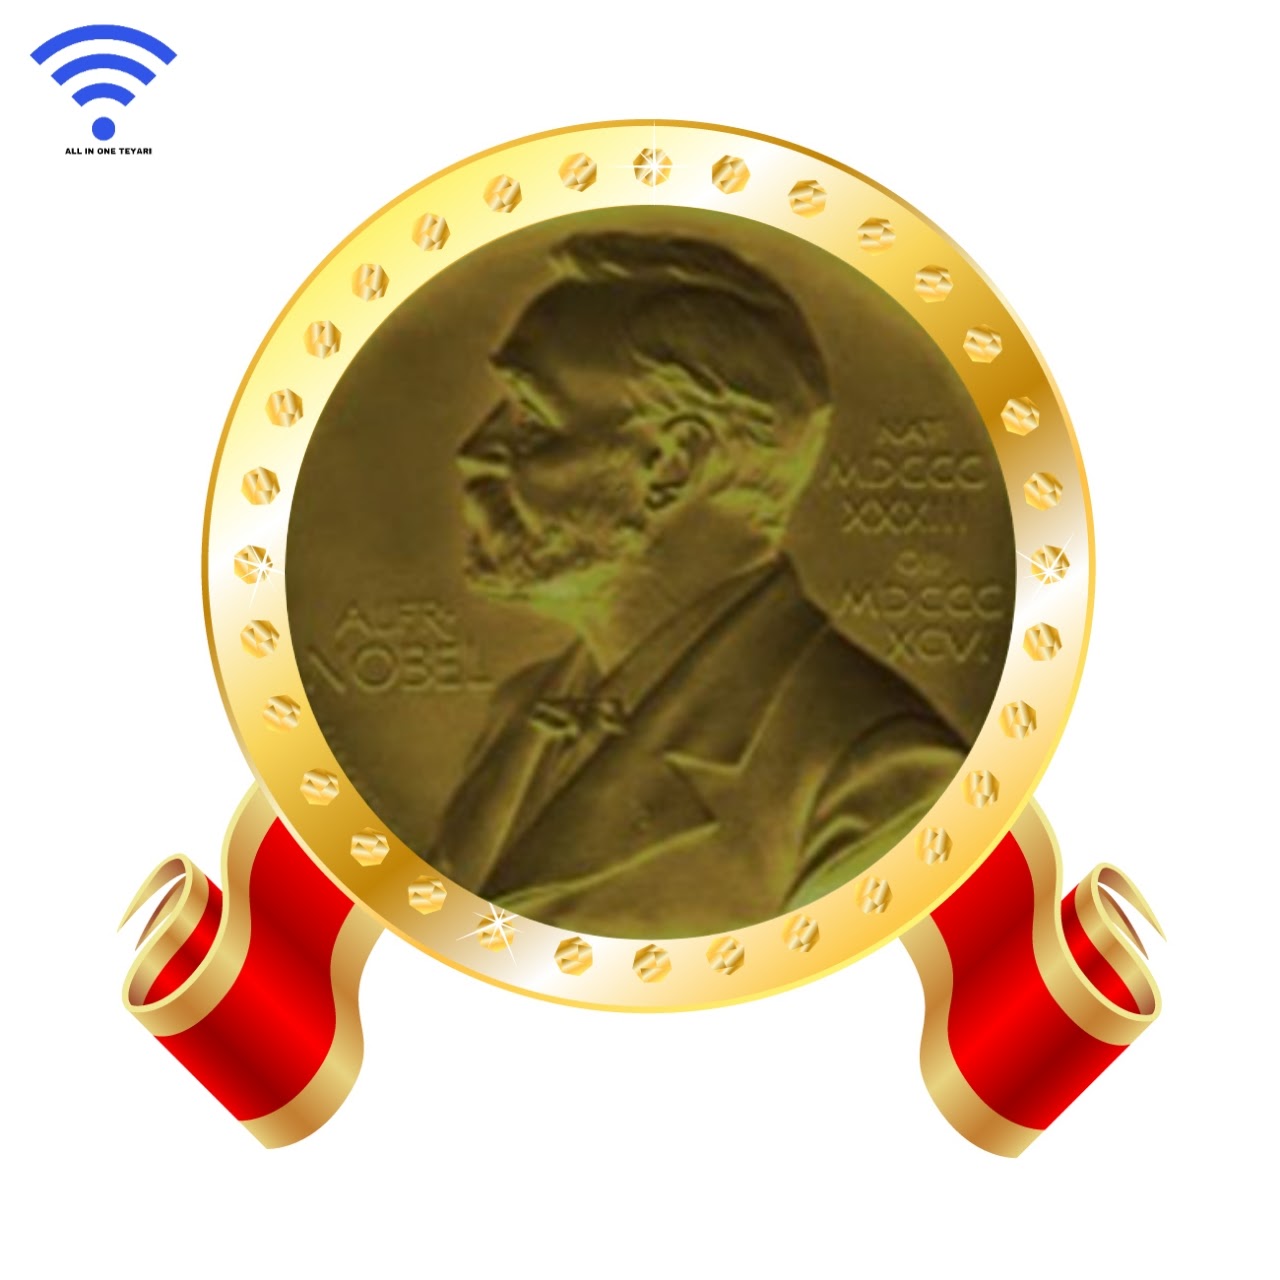 नोबेल पुरस्कार 2021 विजेता सूची | Nobel prize 2021